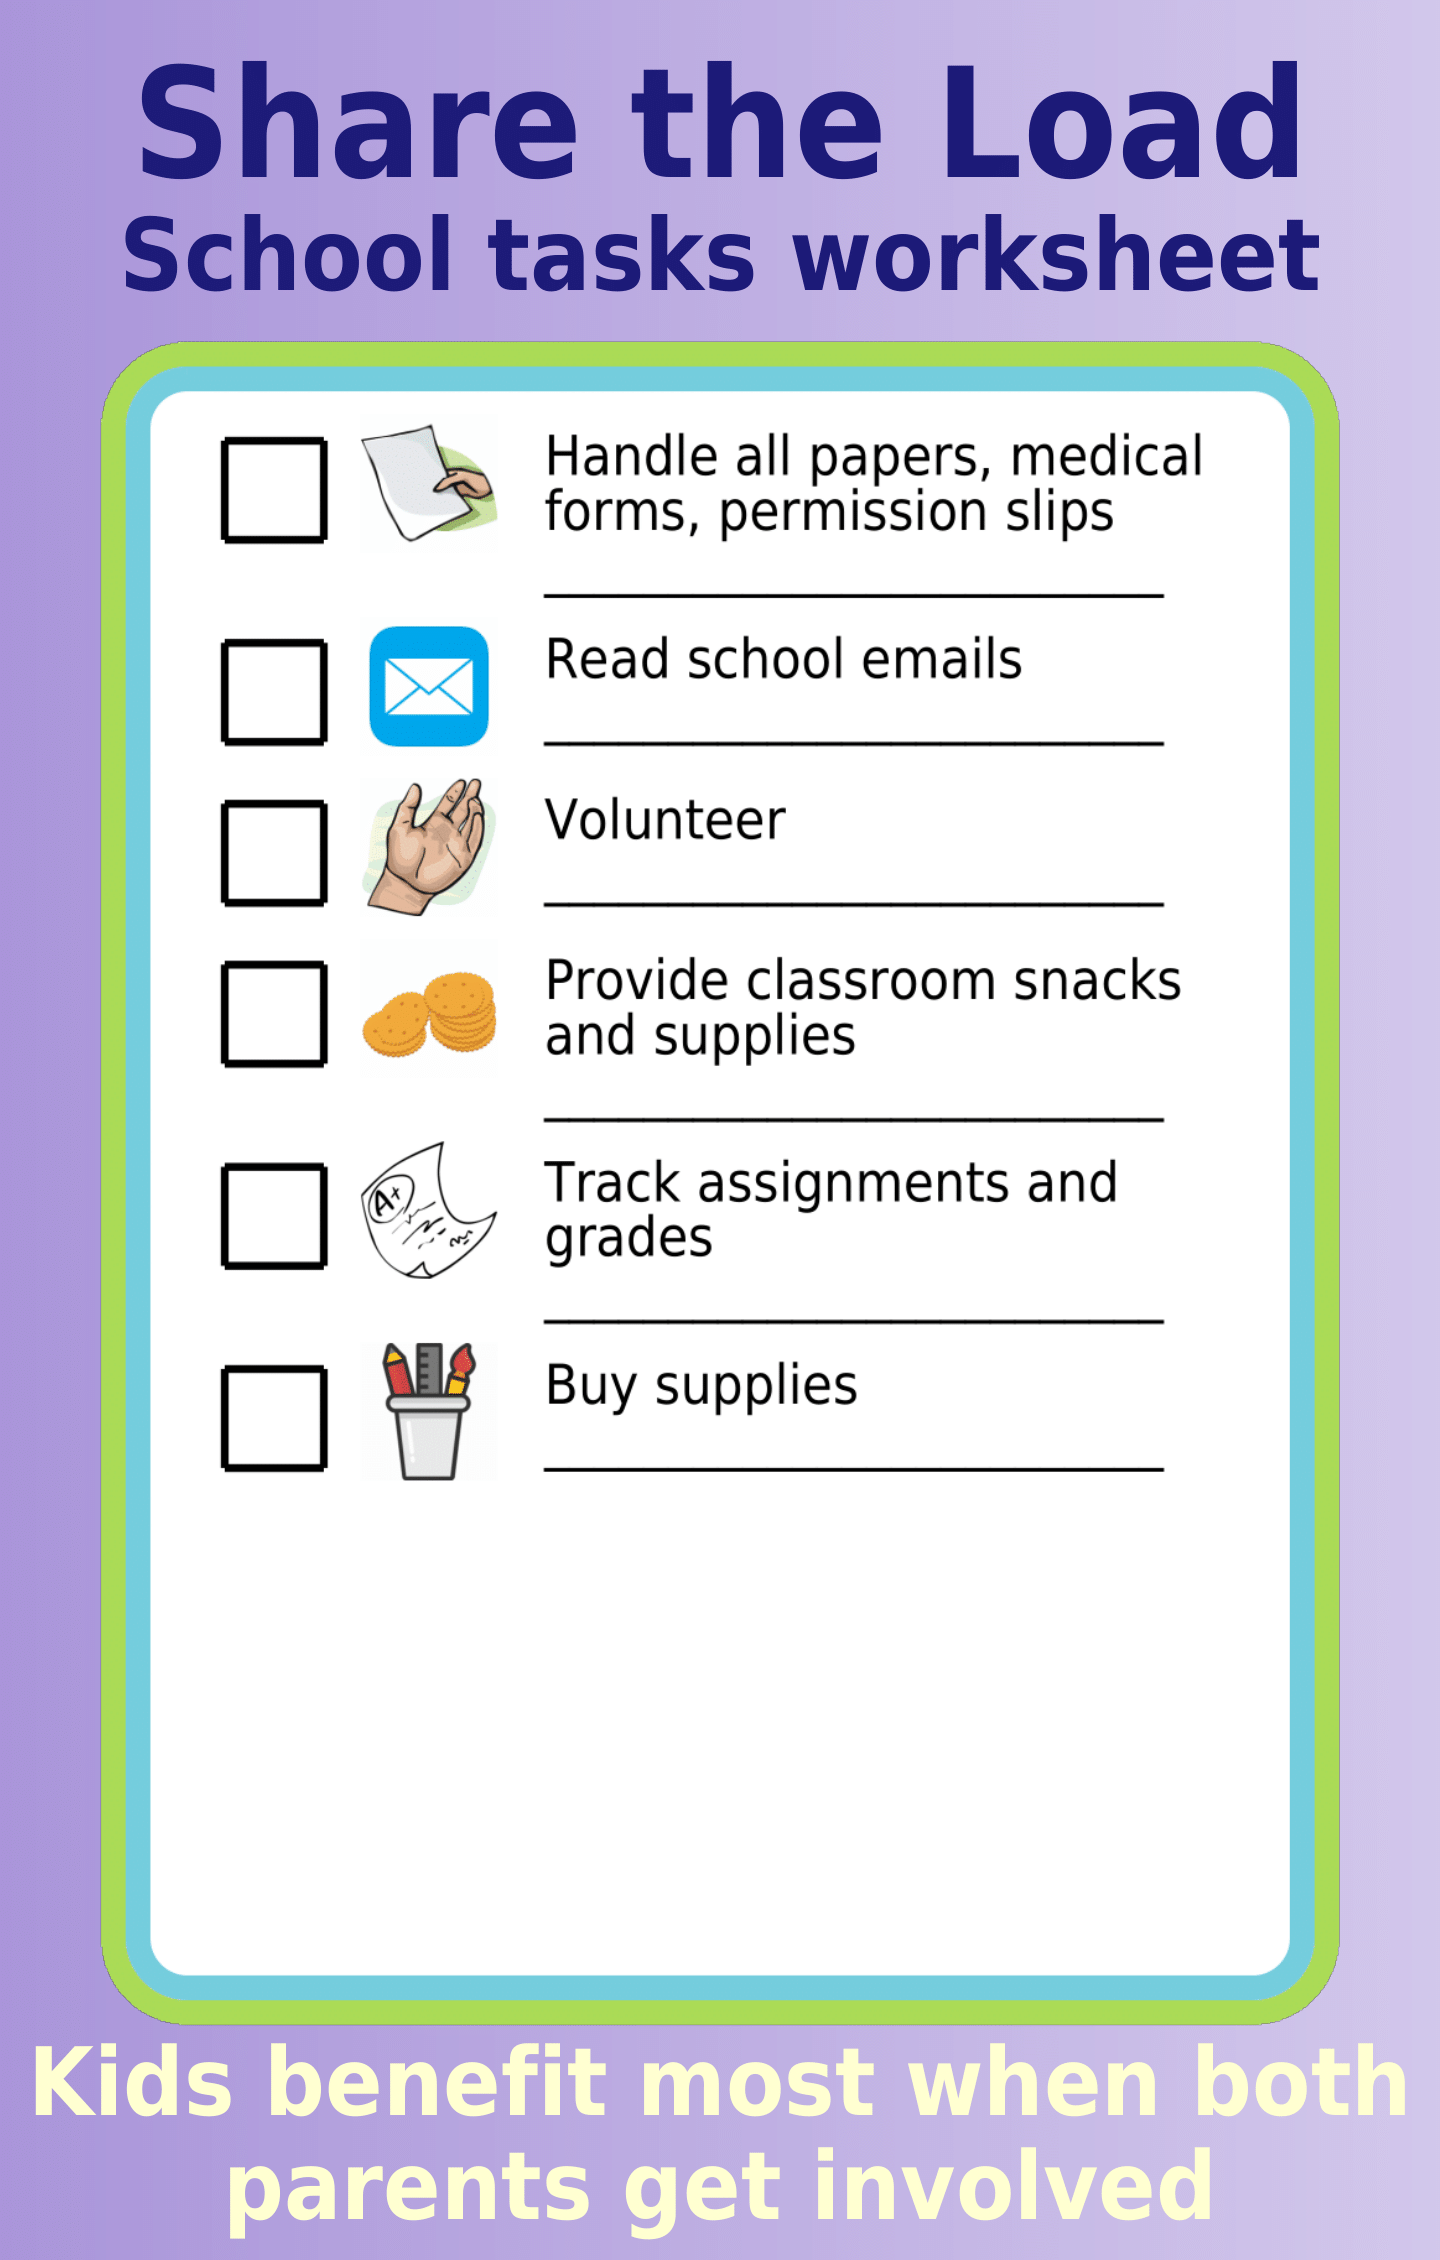 Editable worksheet showing 6 school-related tasks: paperwork, emails, volunteering, snacks and supplies, homework and grades